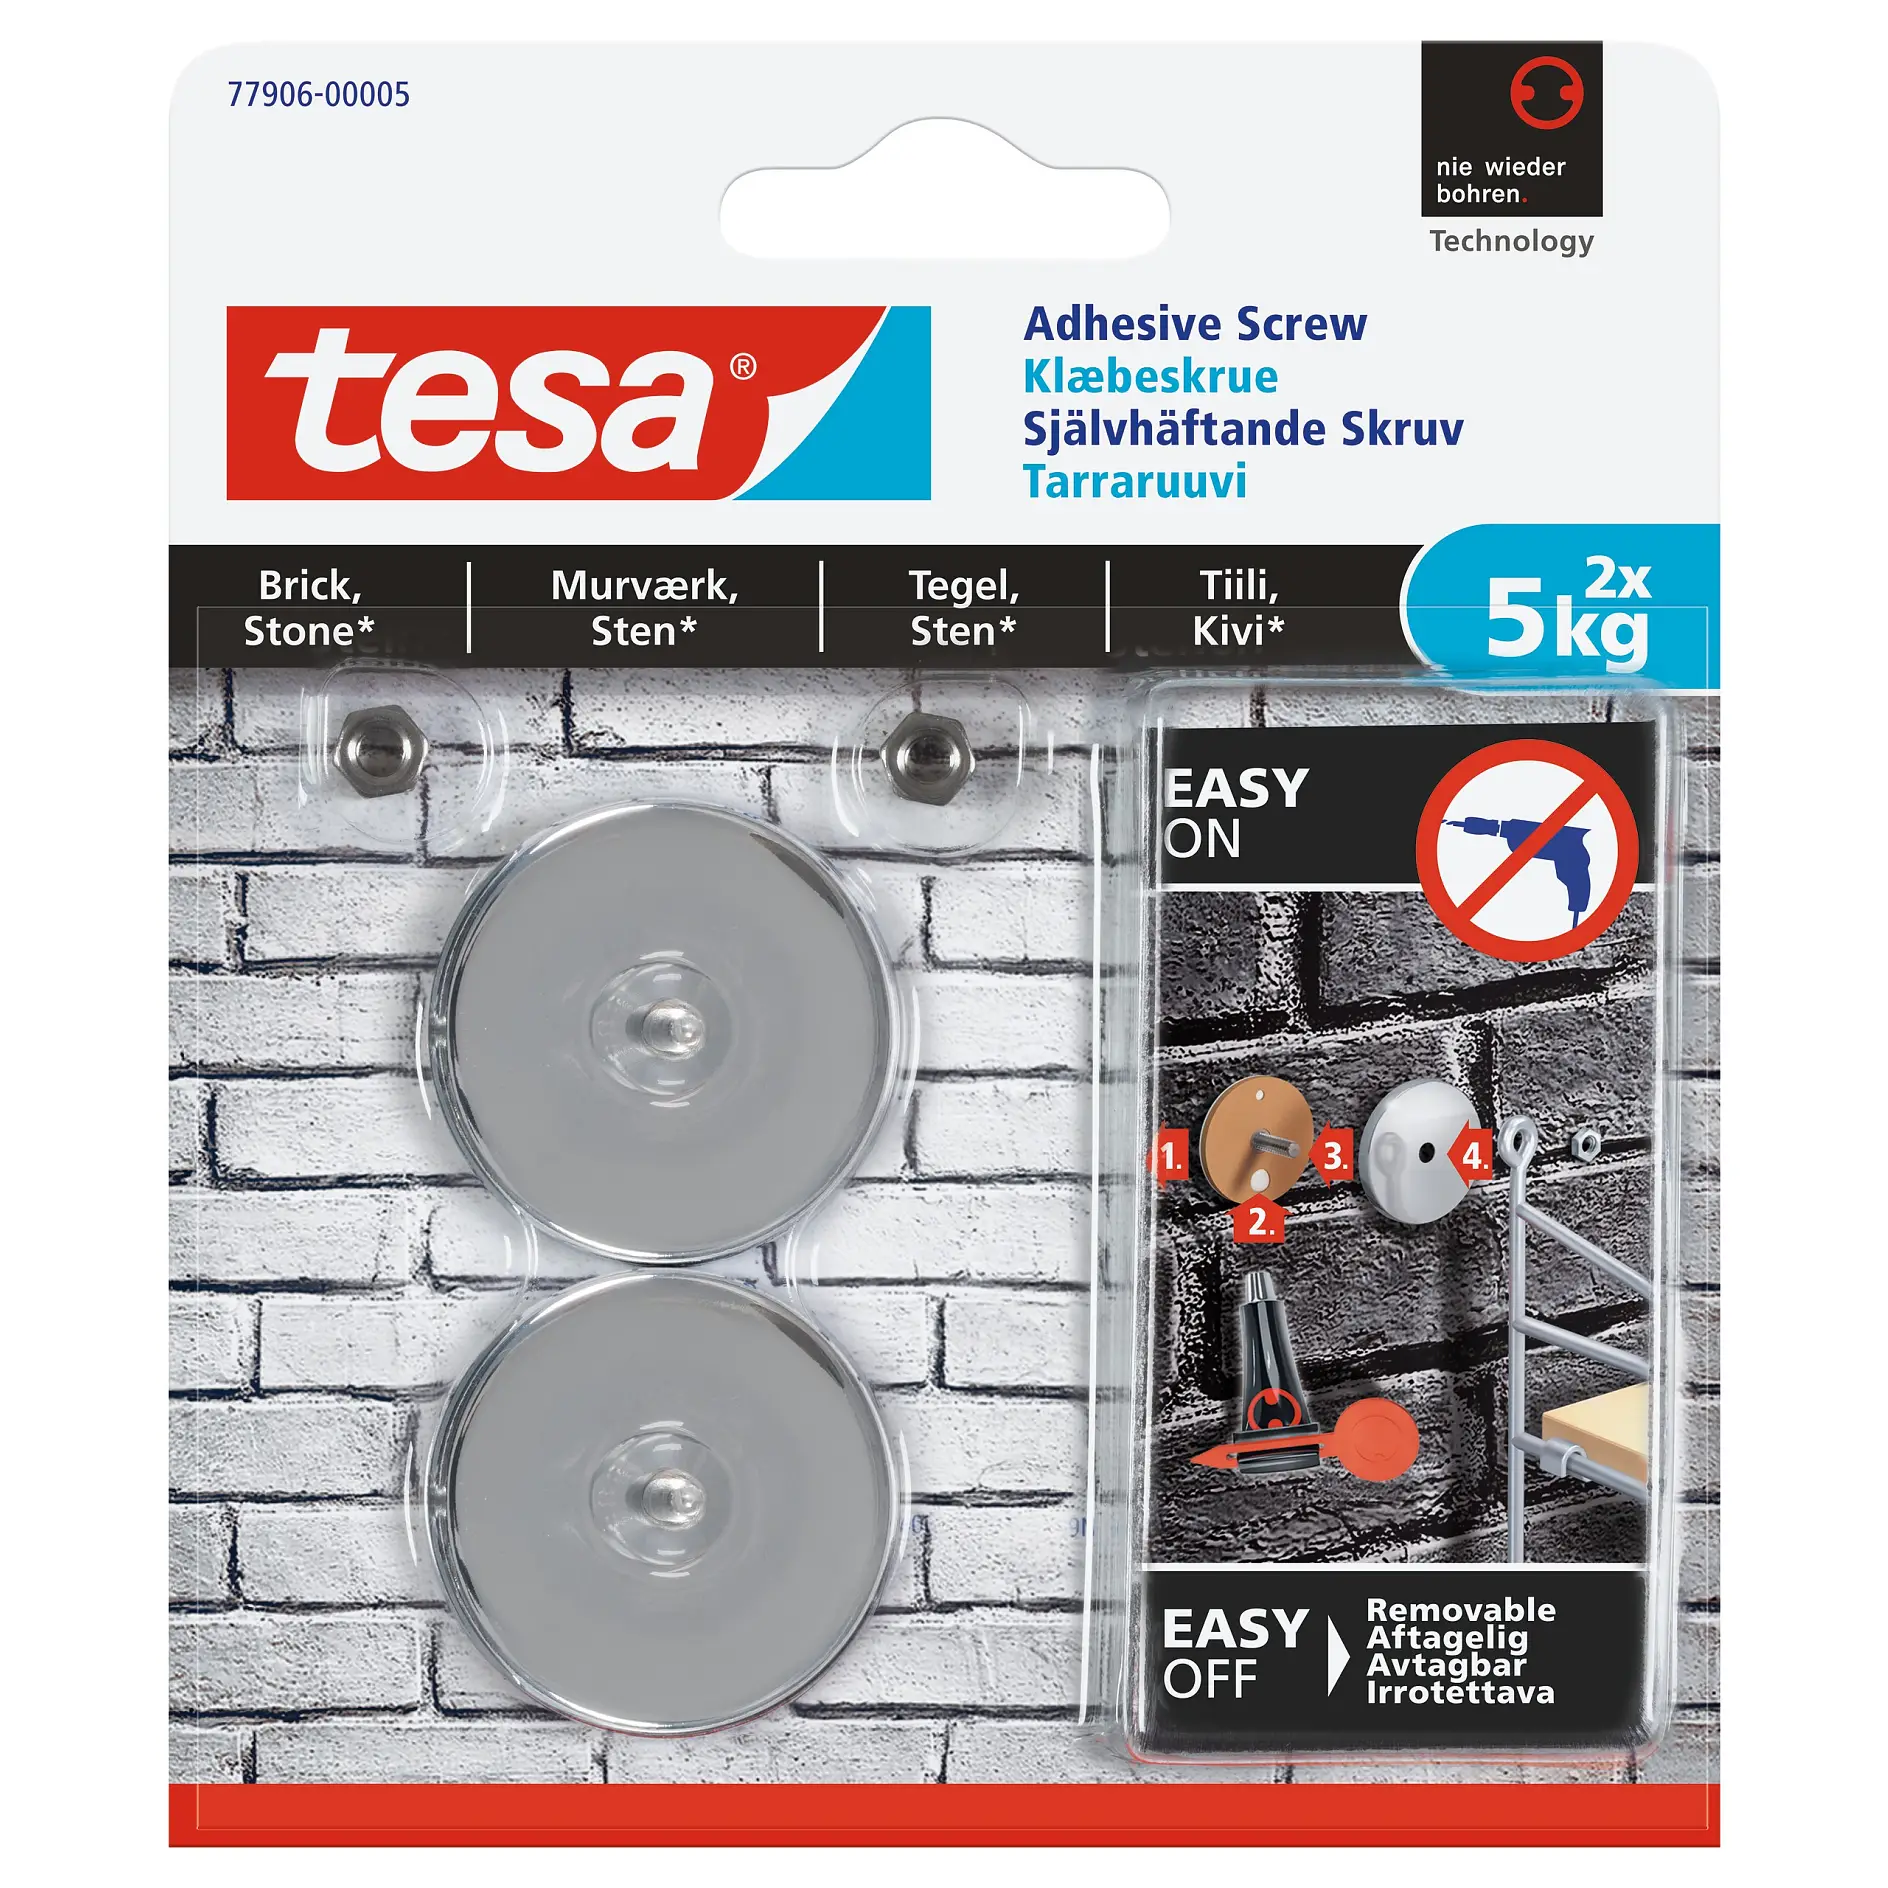 [en-en] tesa Smart Mounting System Adhesive screw for brick, stone, up to 5kg